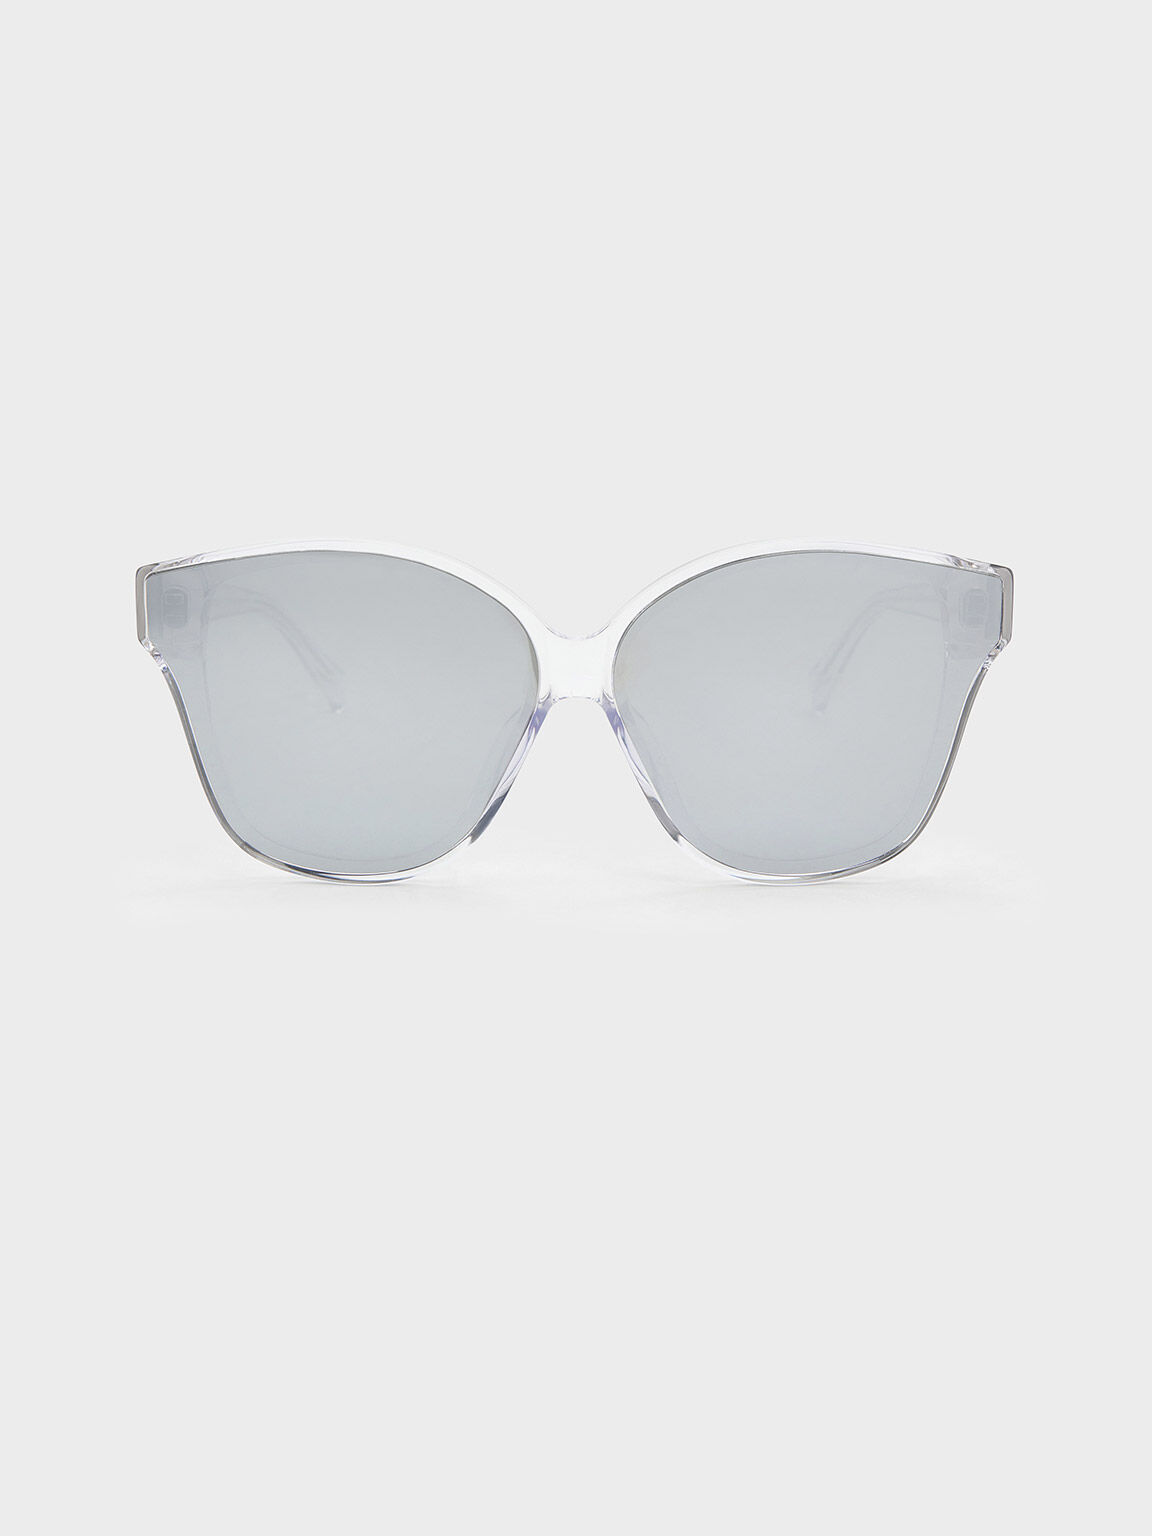 Men's Unisex Clear Transparent Acetate Sunglasses With Grey Lenses Lens |  eBay